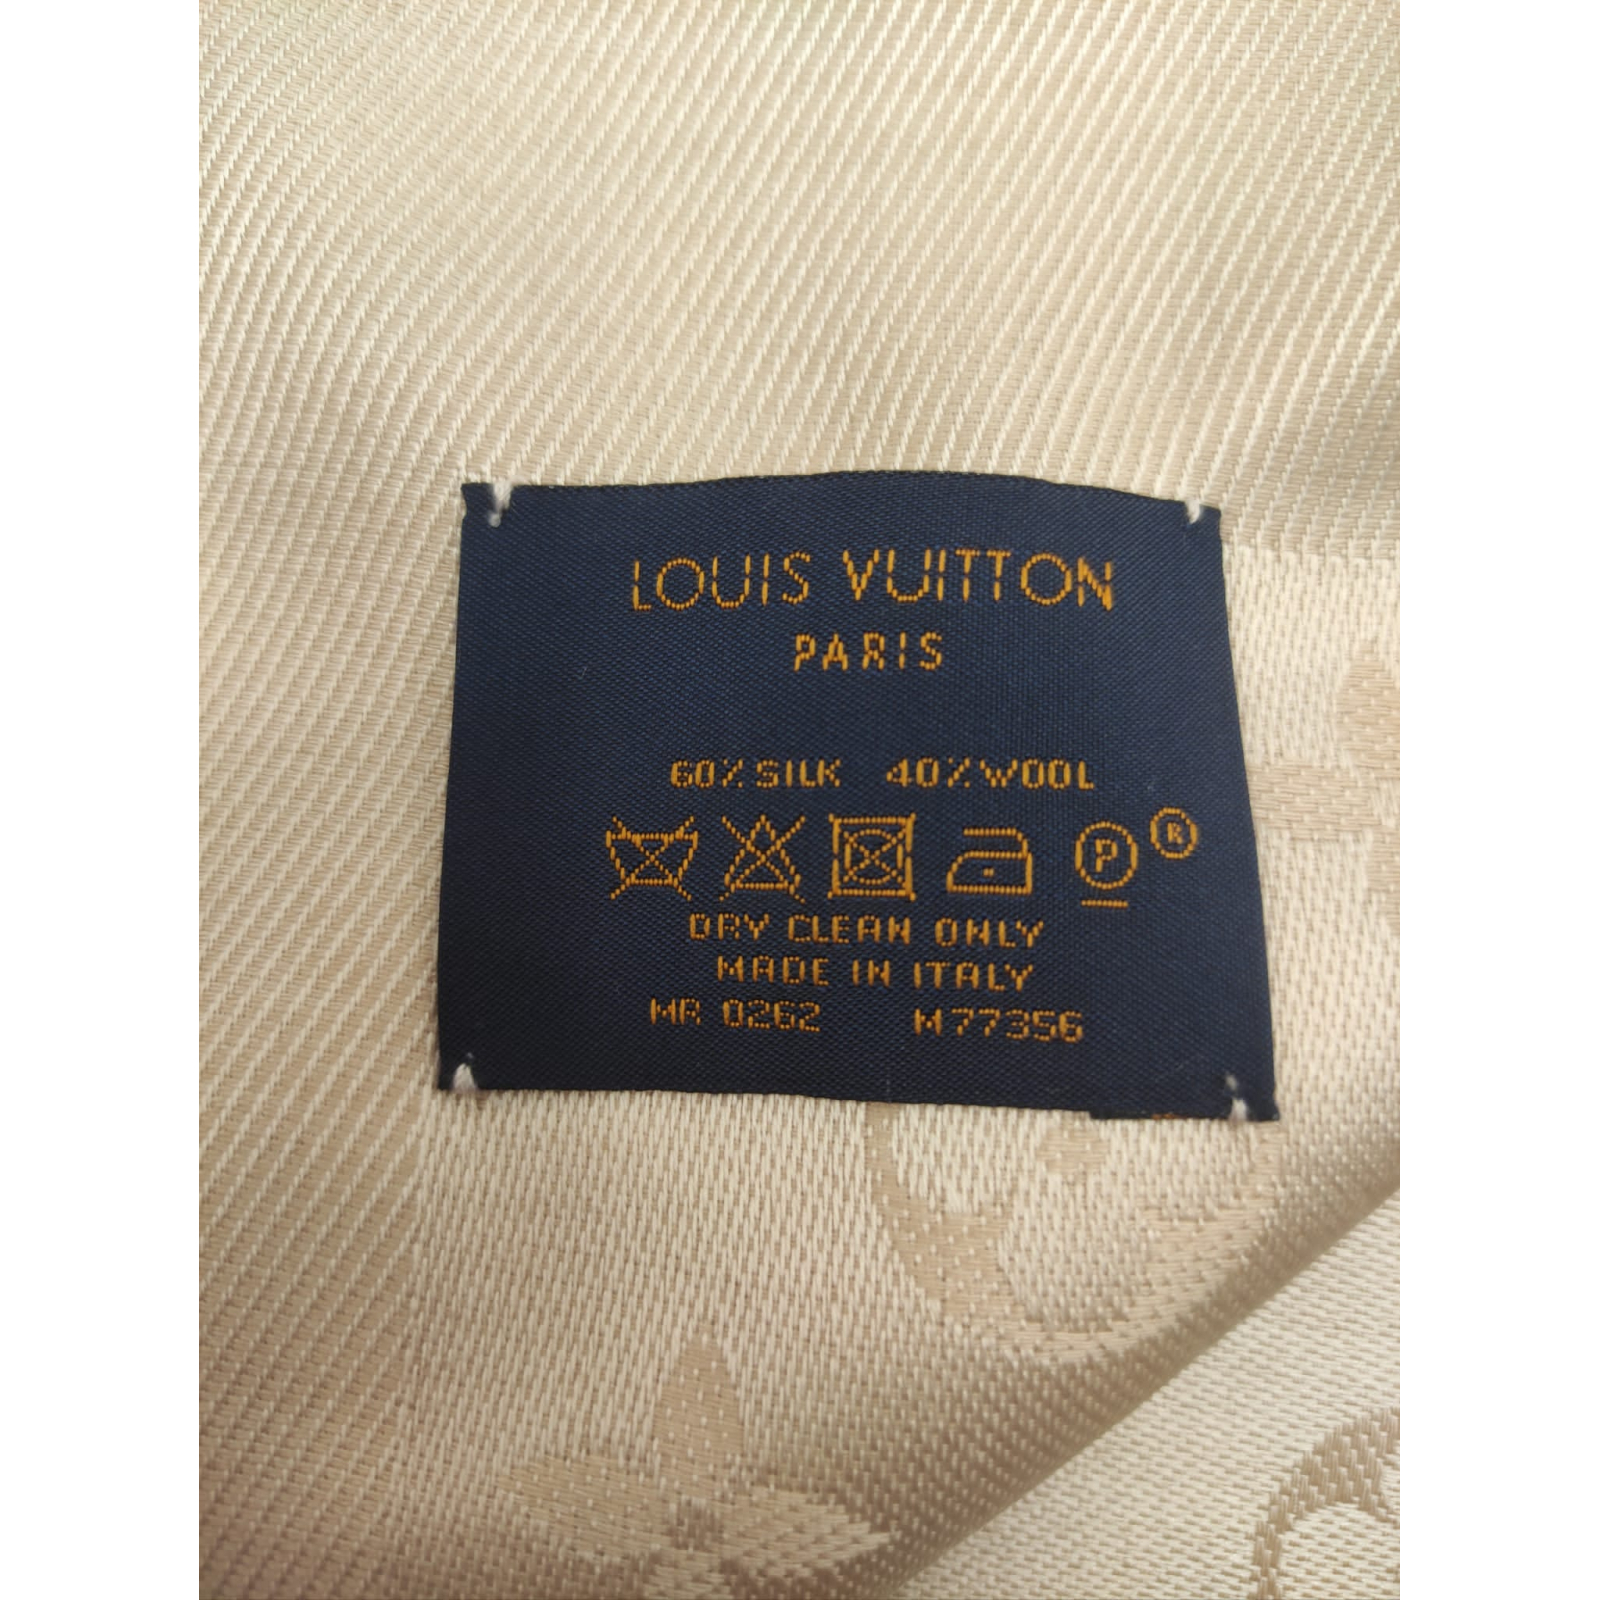 Nowy szal Louis Vuitton monogram M77356